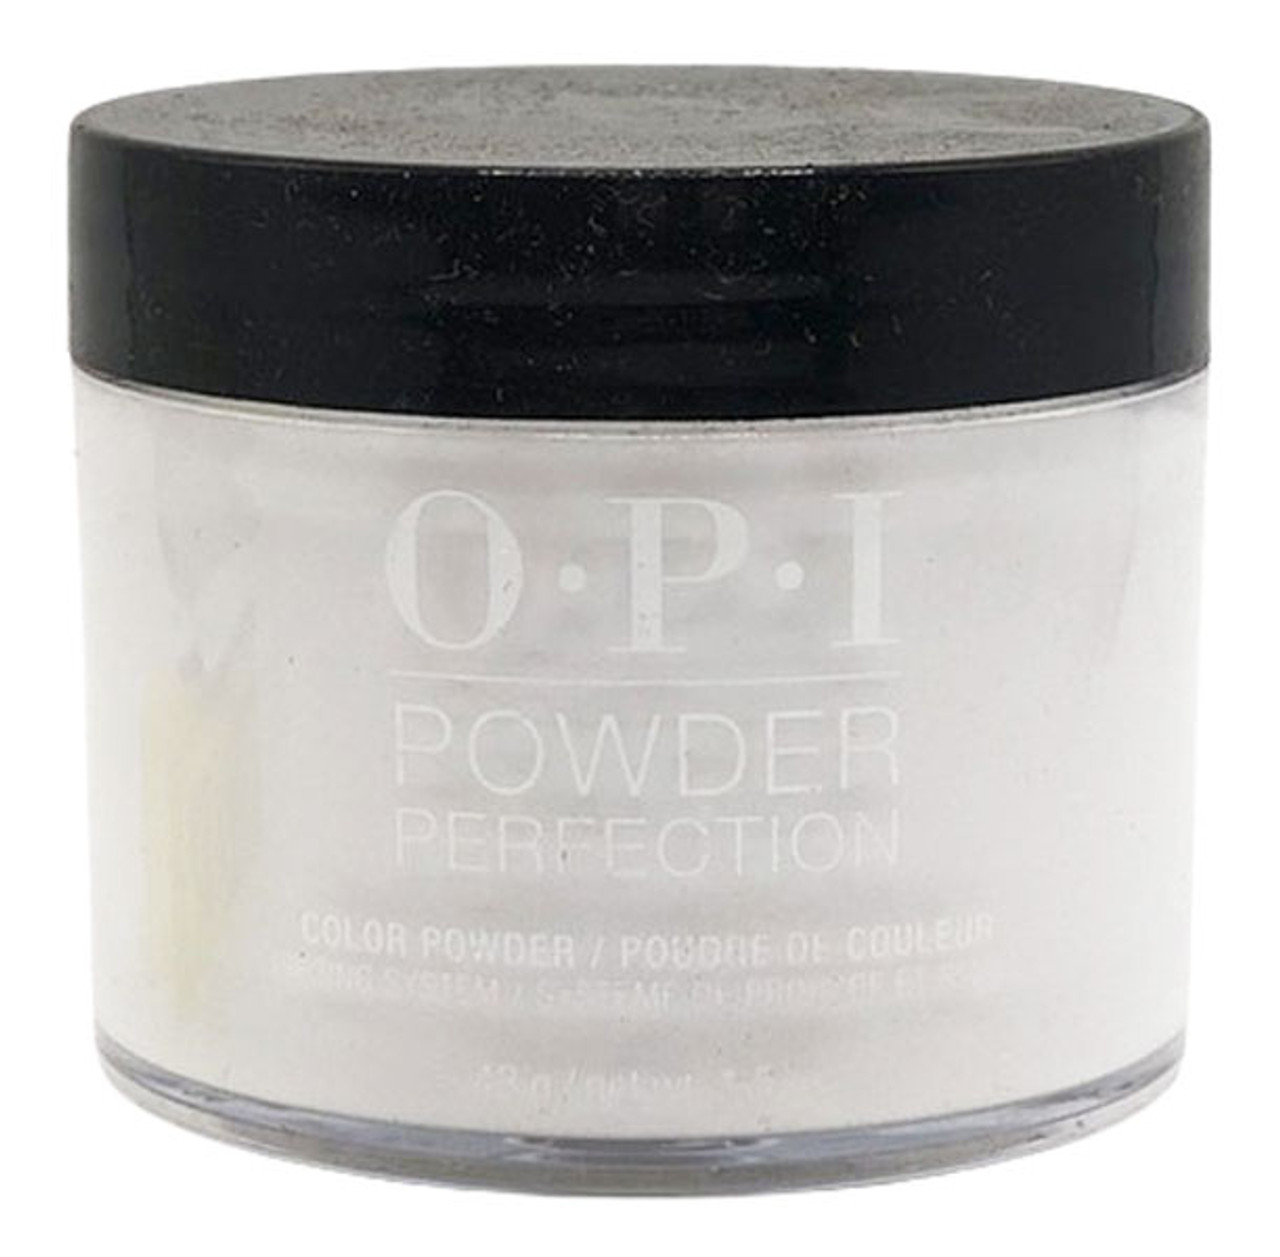 OPI Dipping Powder Perfection Funny Bunny - 1.5 oz / 43 G